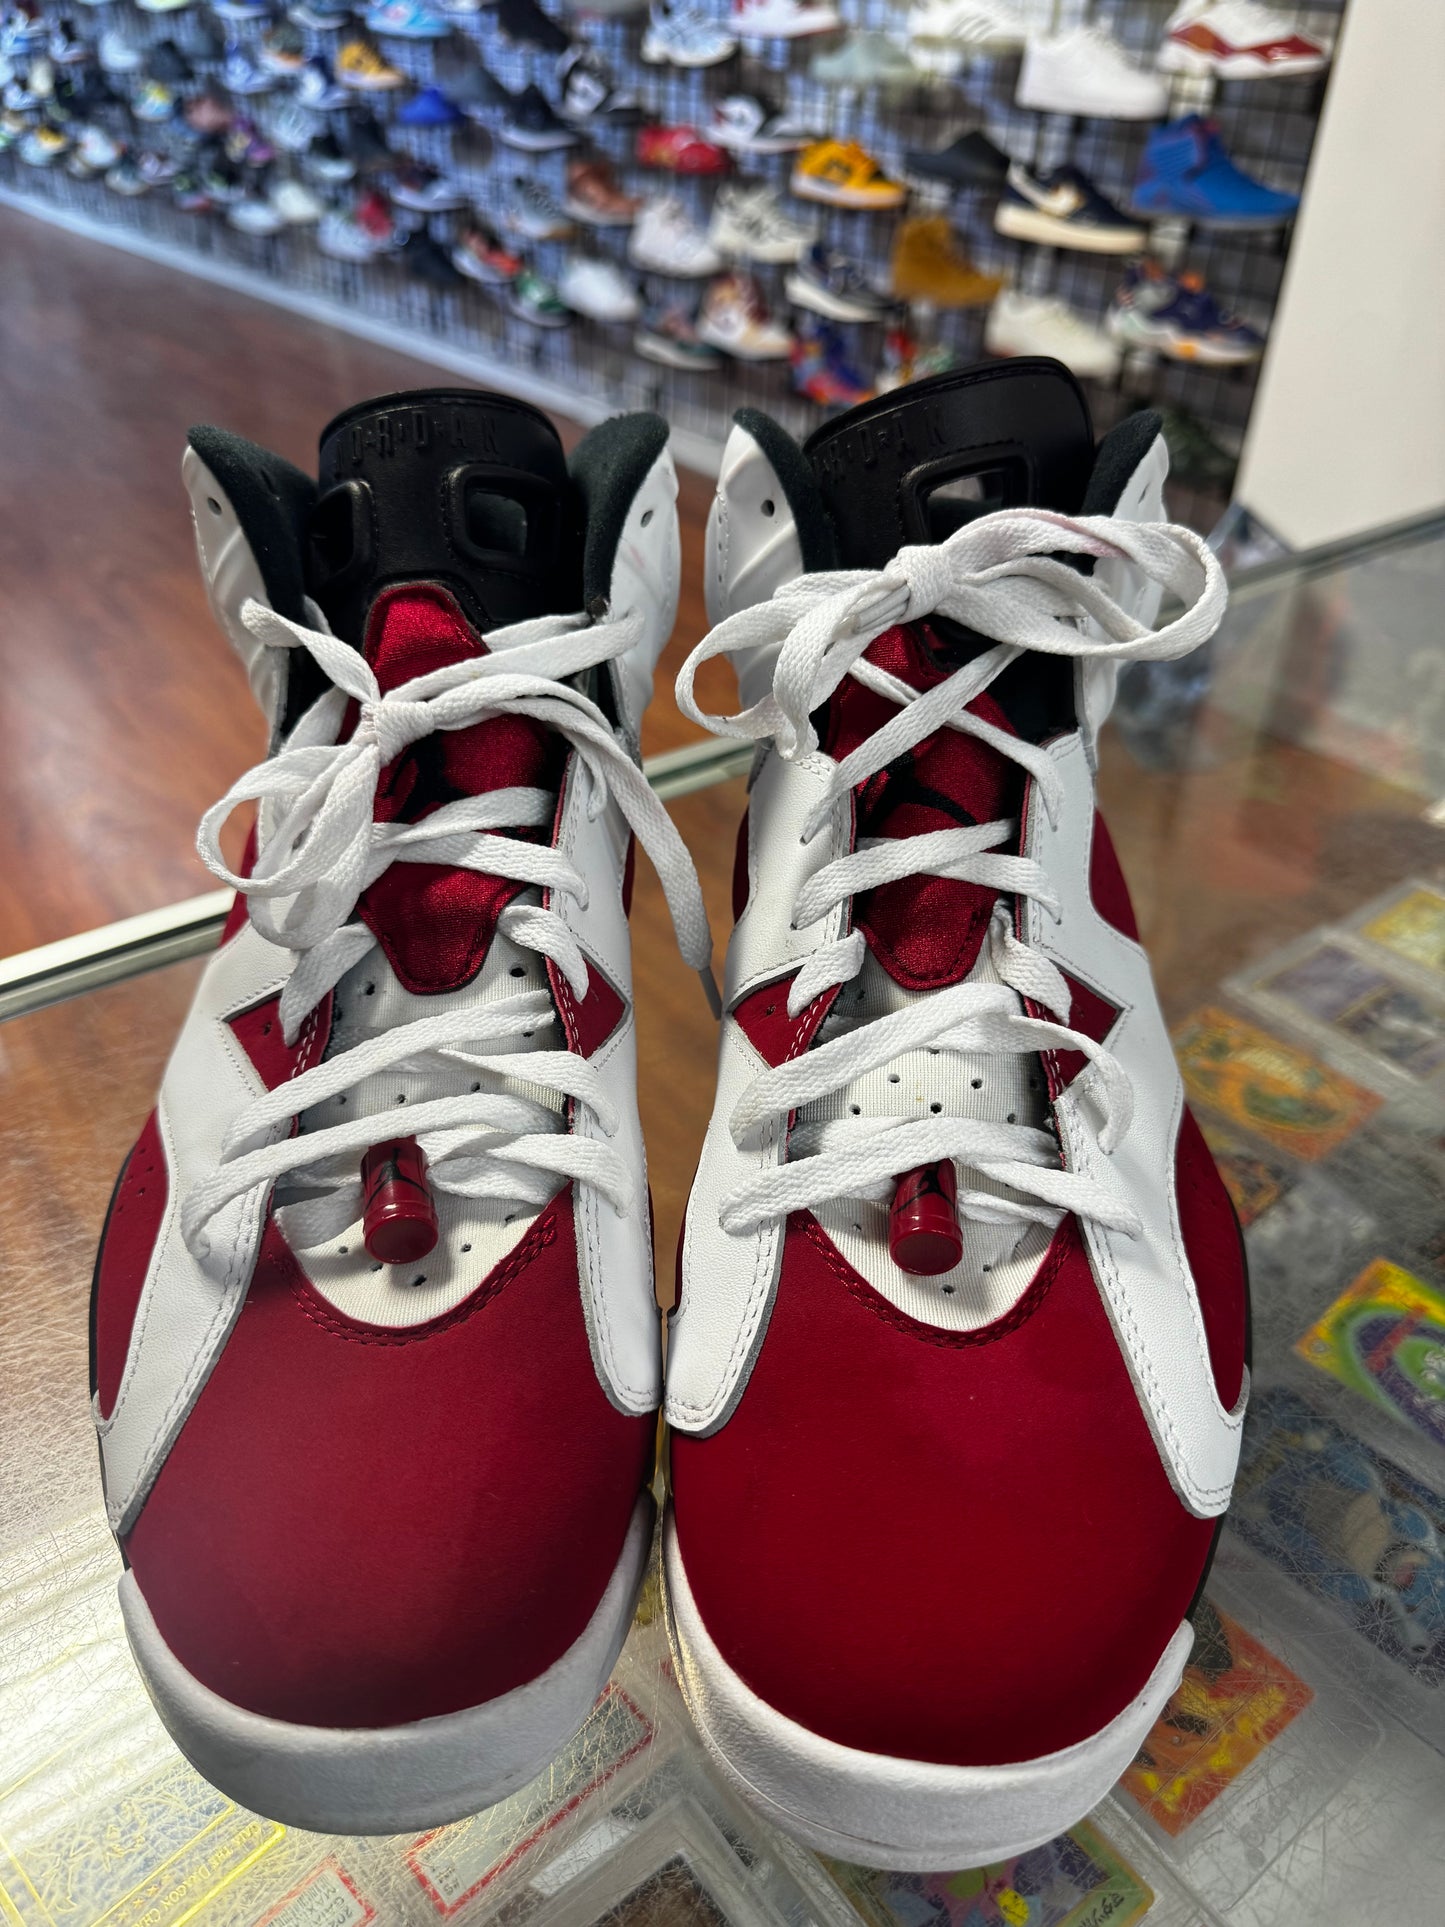 Size 13 Air Jordan 6 "Carmine" (MAMO)